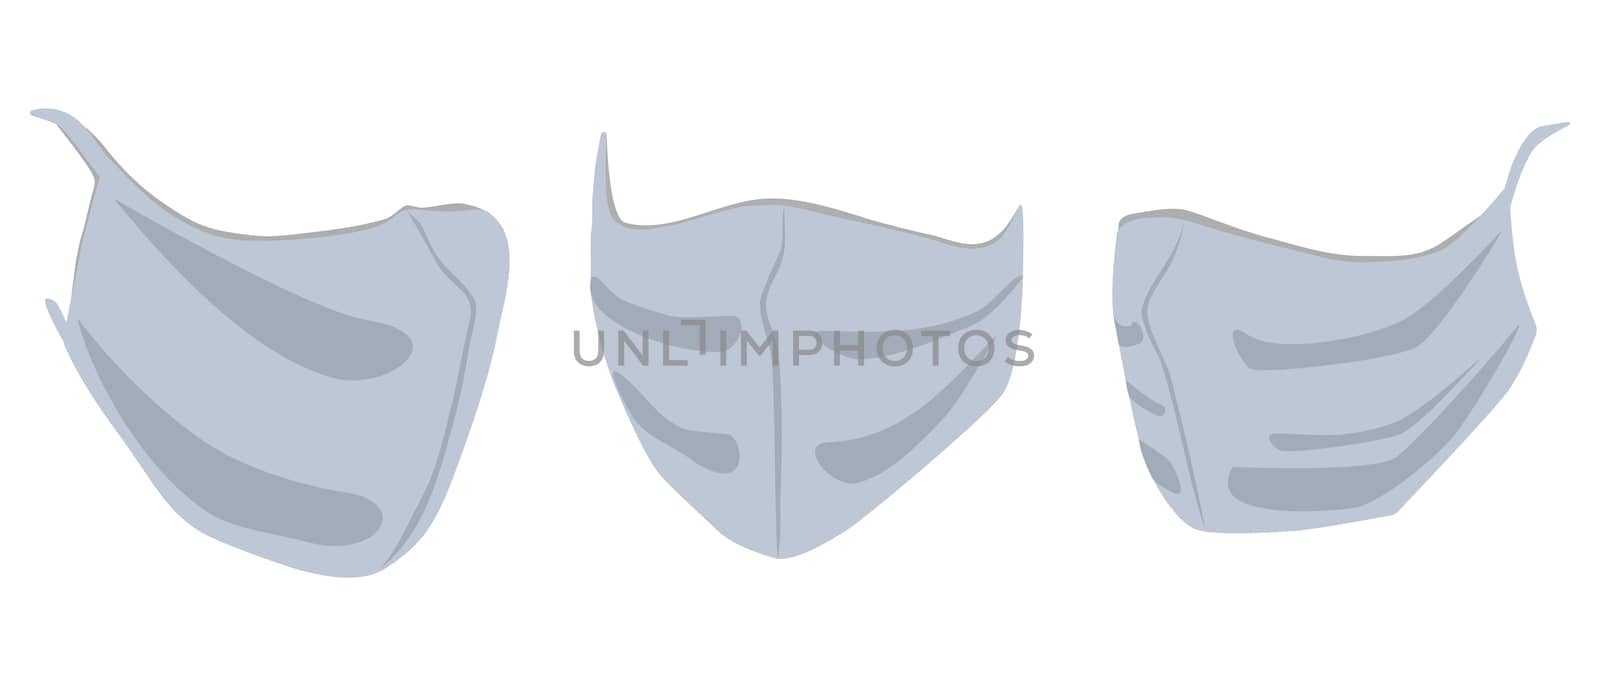 Grey protective medical mask. Hygiene mask PPE Virus protection. Vector illustration isolated on white background.